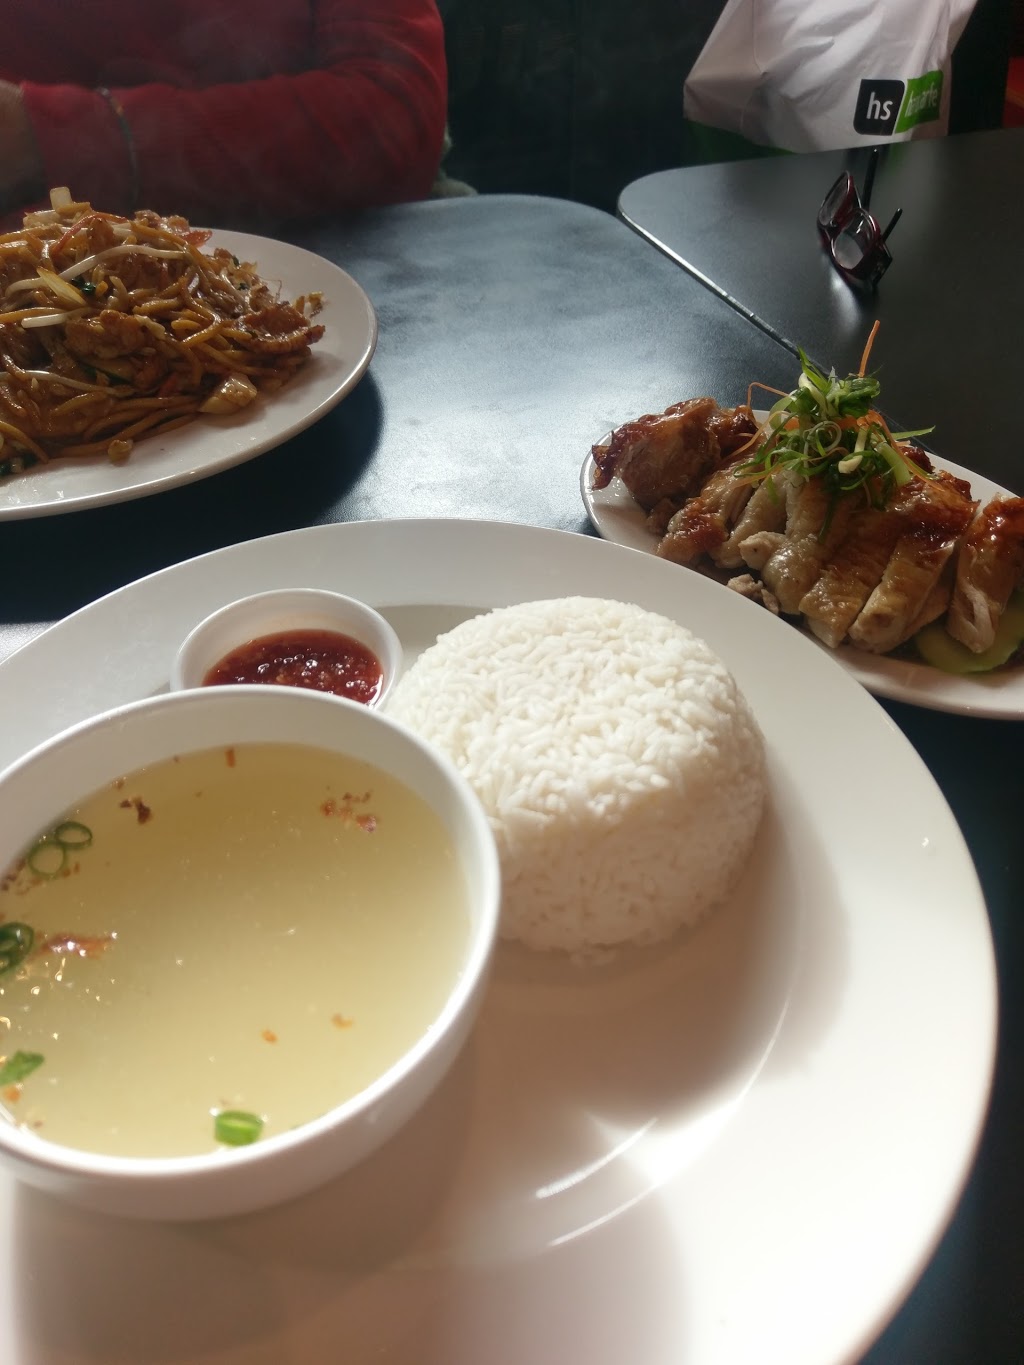 Red Lantern Malaysian & Asian Cuisine Restaurant | restaurant | 533-555 High St, Shop RES02 Woodgrove Shopping Centre, Melton West VIC 3337, Australia | 0397433340 OR +61 3 9743 3340